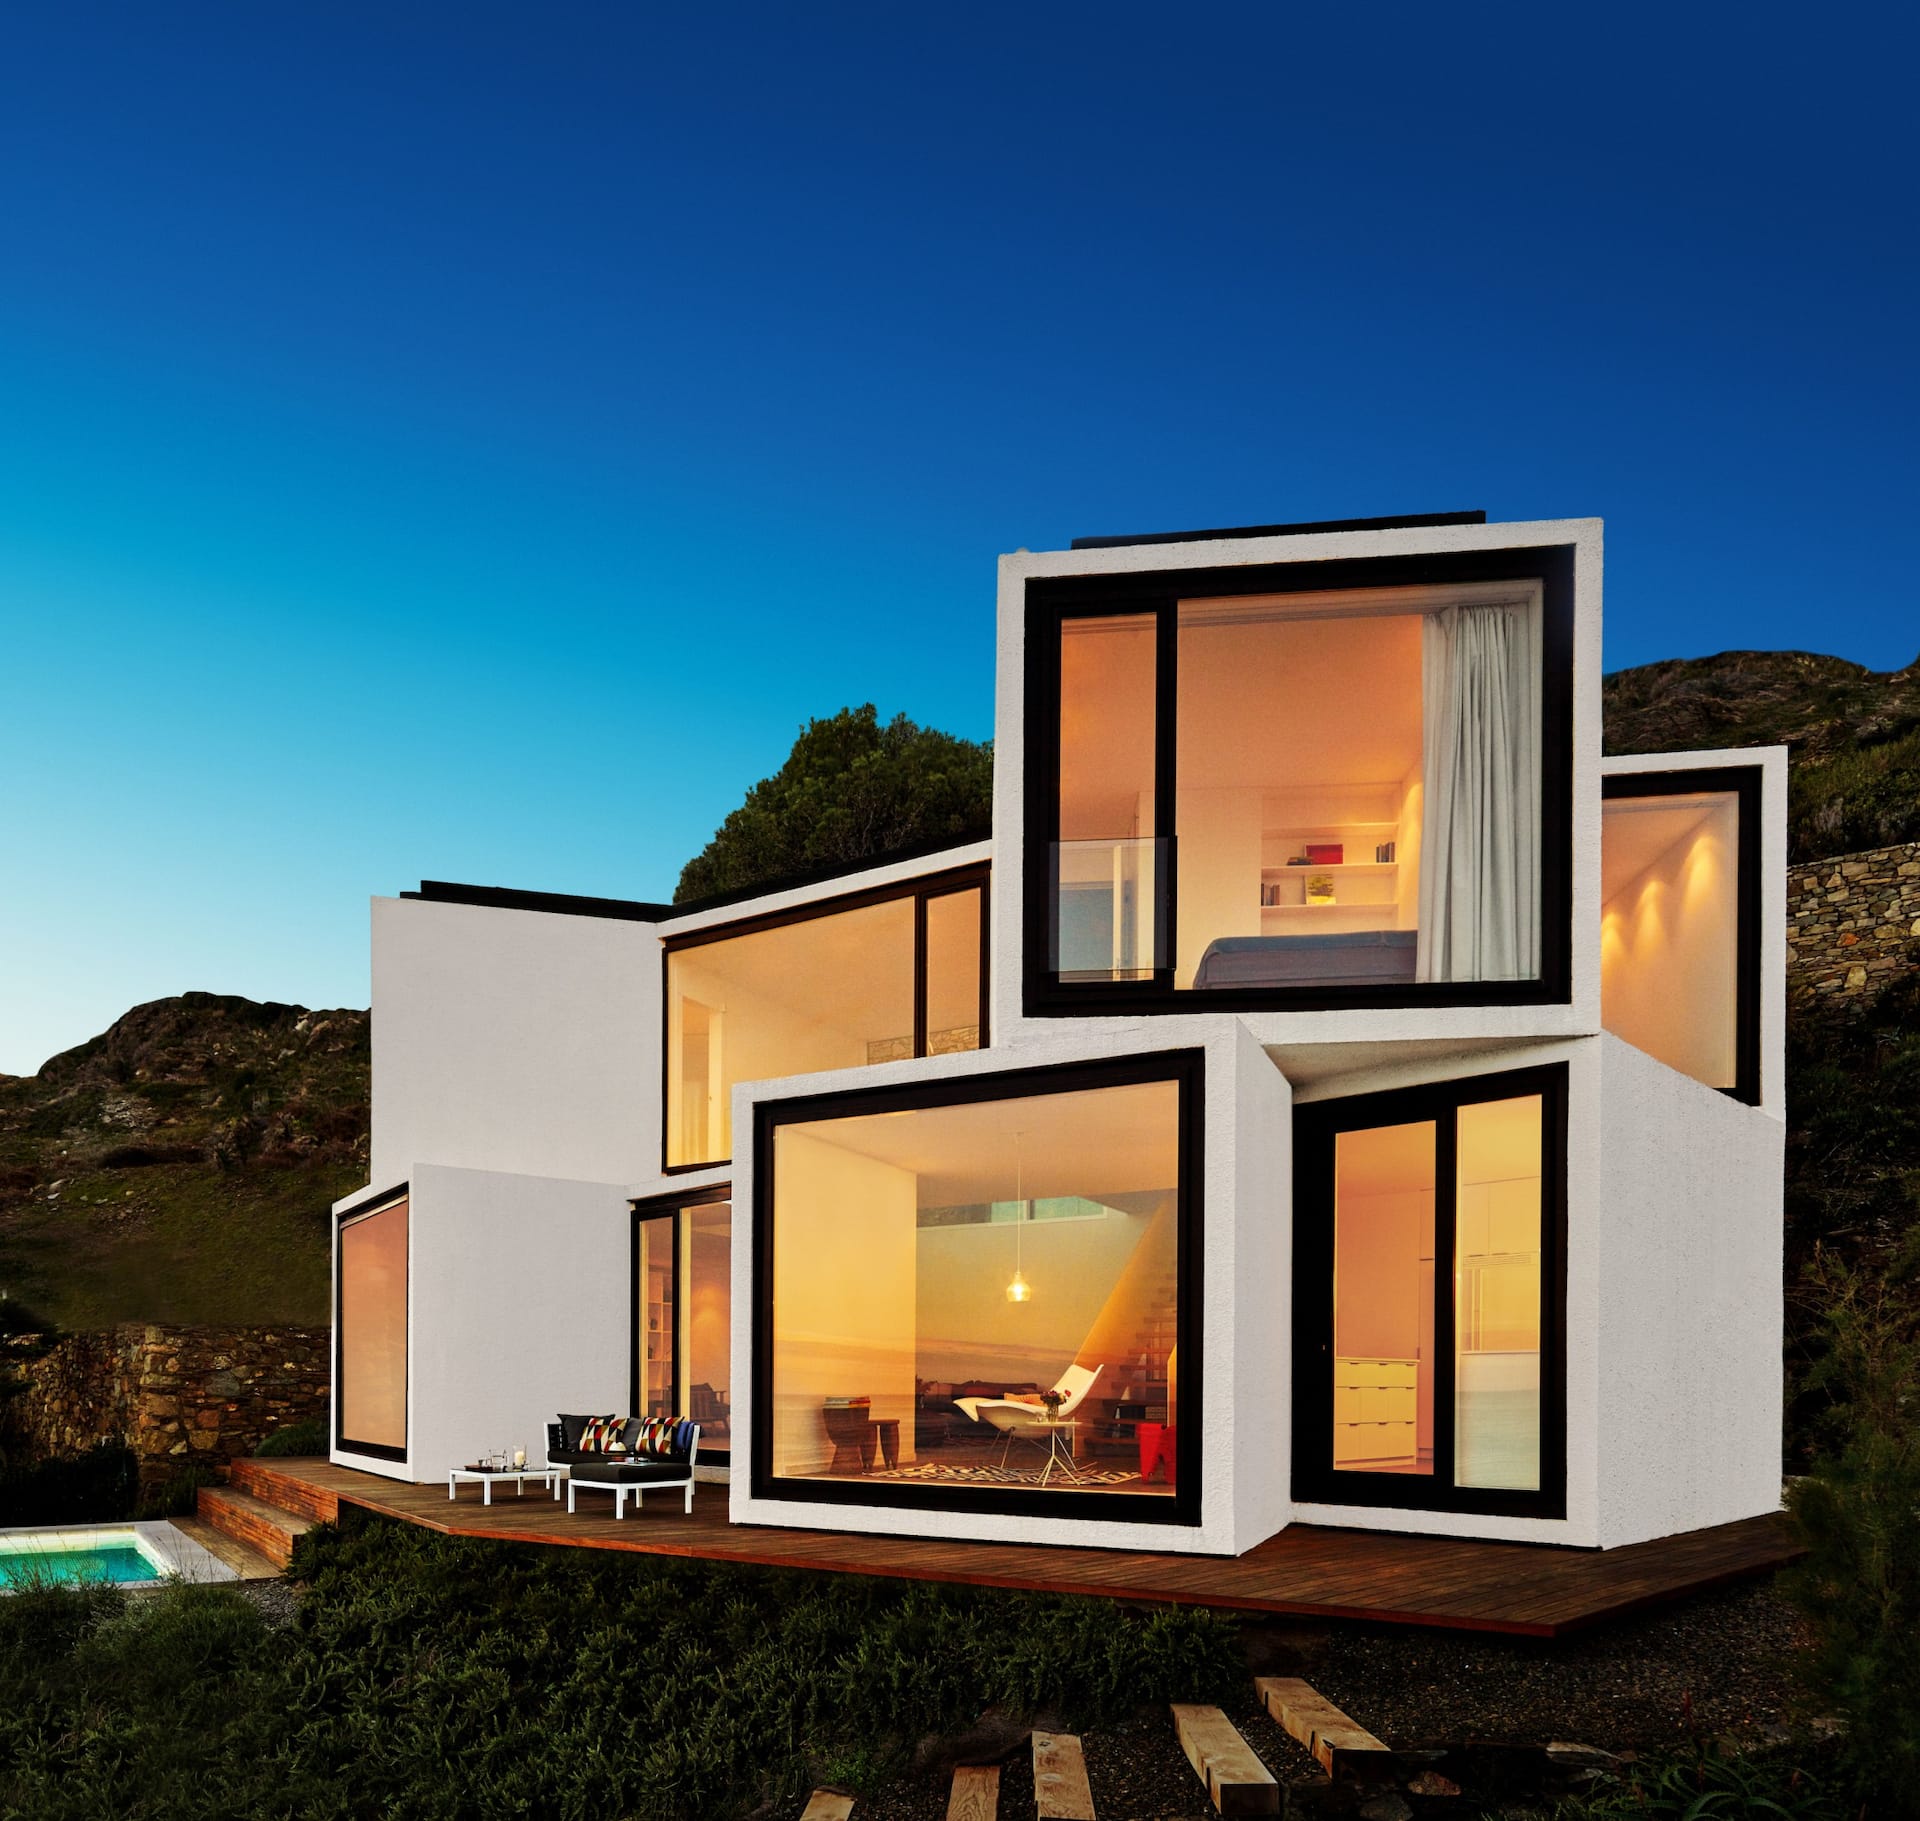 Transform Your Luxury Villa with Beautiful Bali Interior Design Ideas